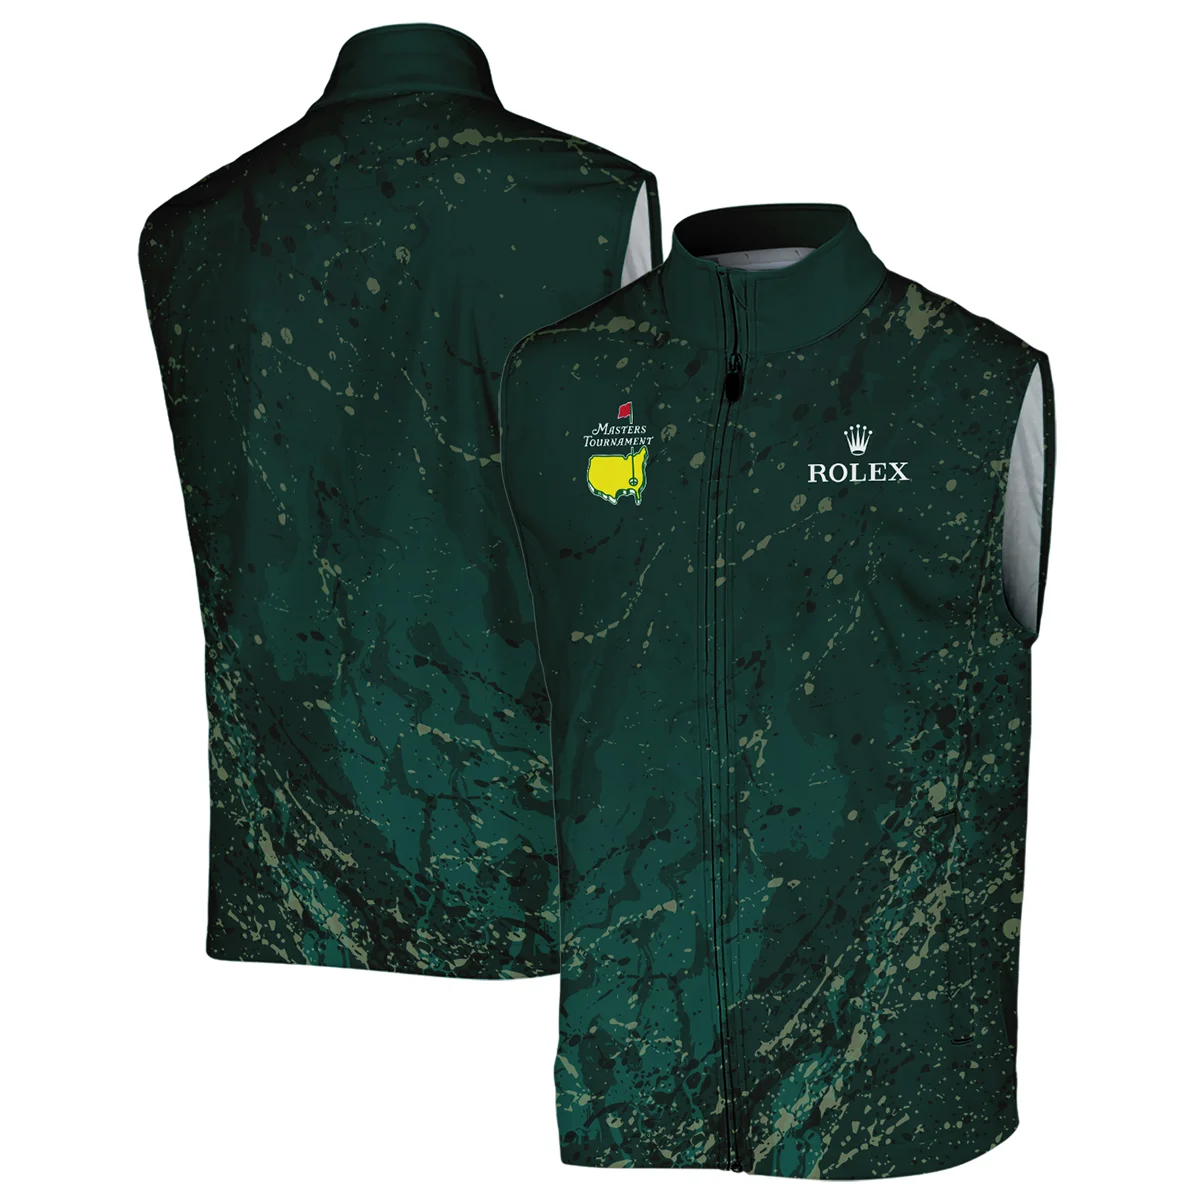 Old Cracked Texture With Gold Splash Paint Masters Tournament Rolex Sleeveless Jacket Style Classic Sleeveless Jacket